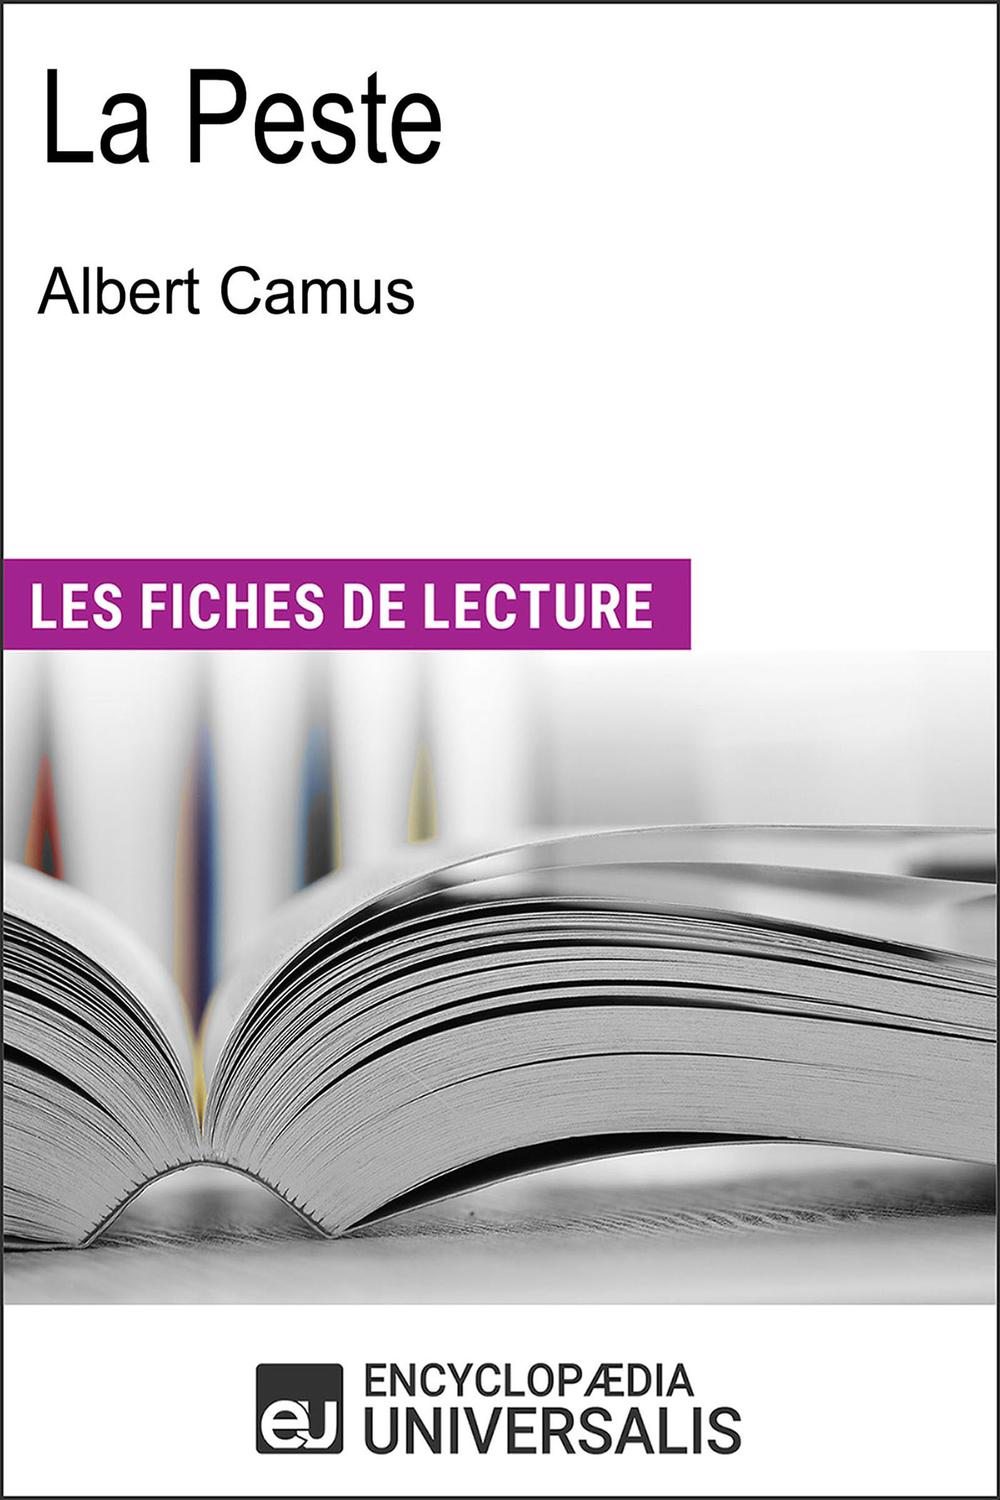 La Peste d'Albert Camus - Encyclopaedia Universalis,,